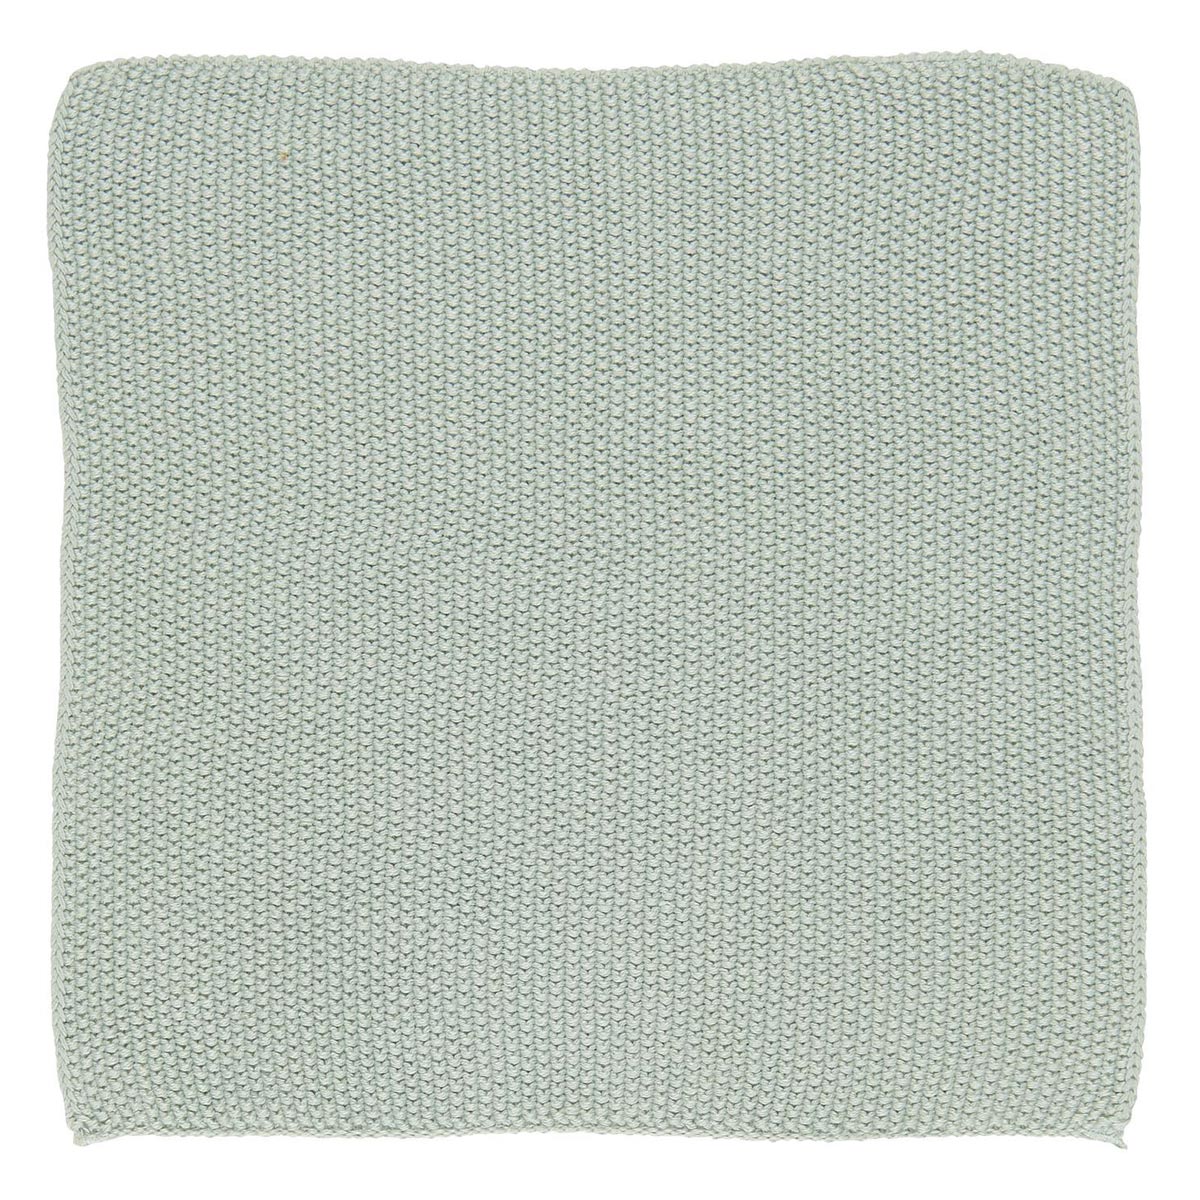 IB Laursen Mynte Cloth Aqua Haze knitted 6351-83